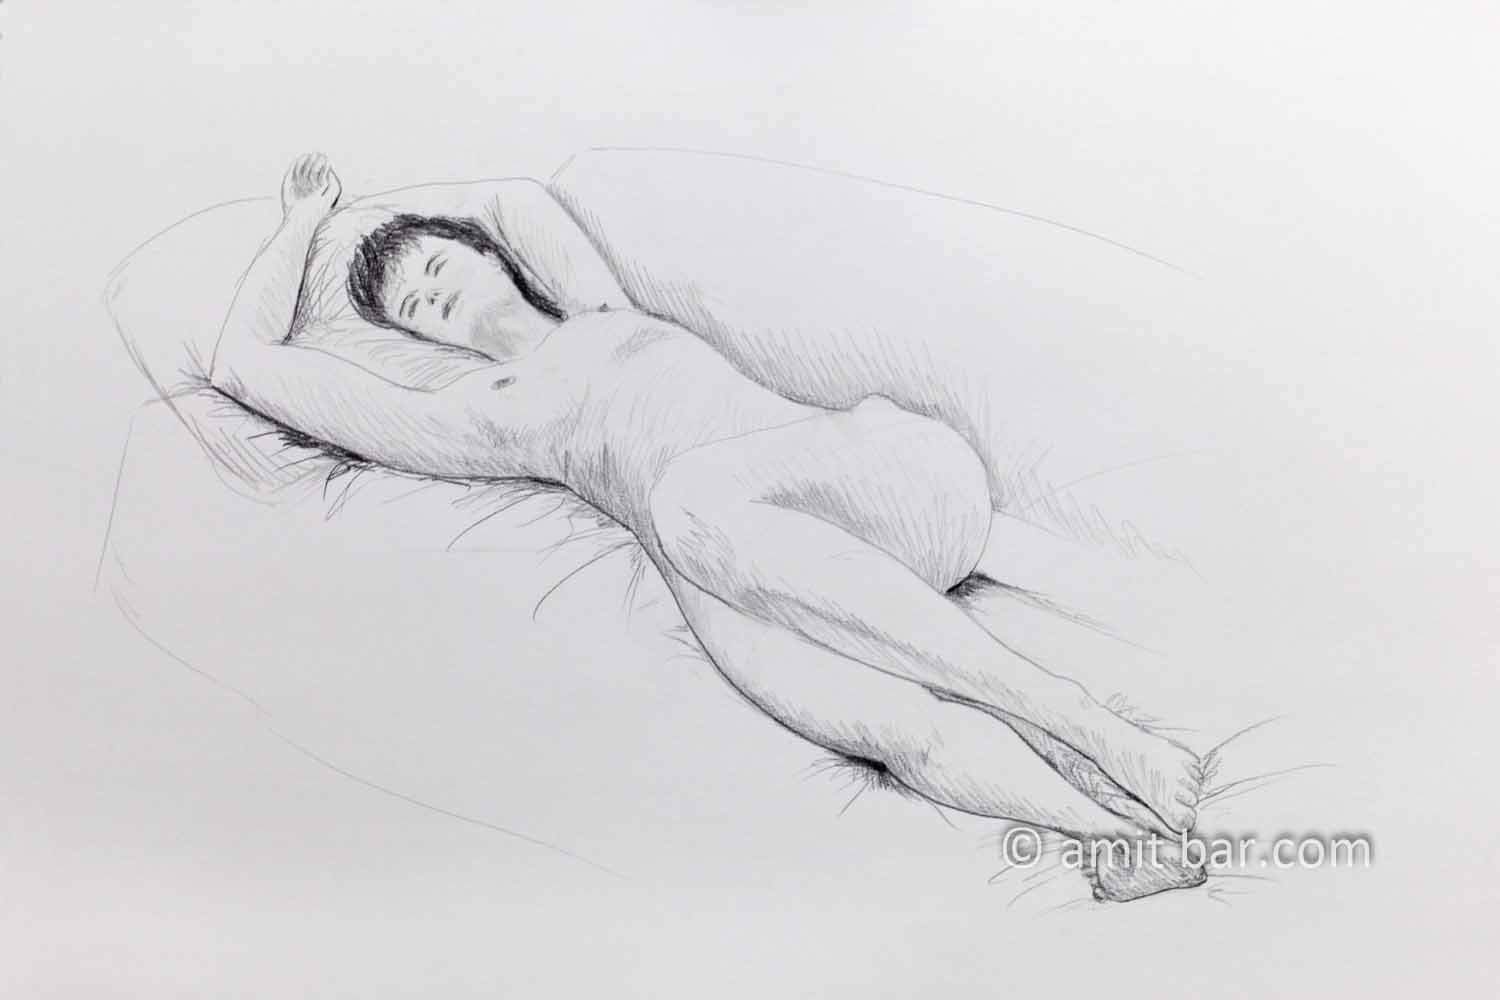 Nude model sleeping on a sofa. Pencil drawing